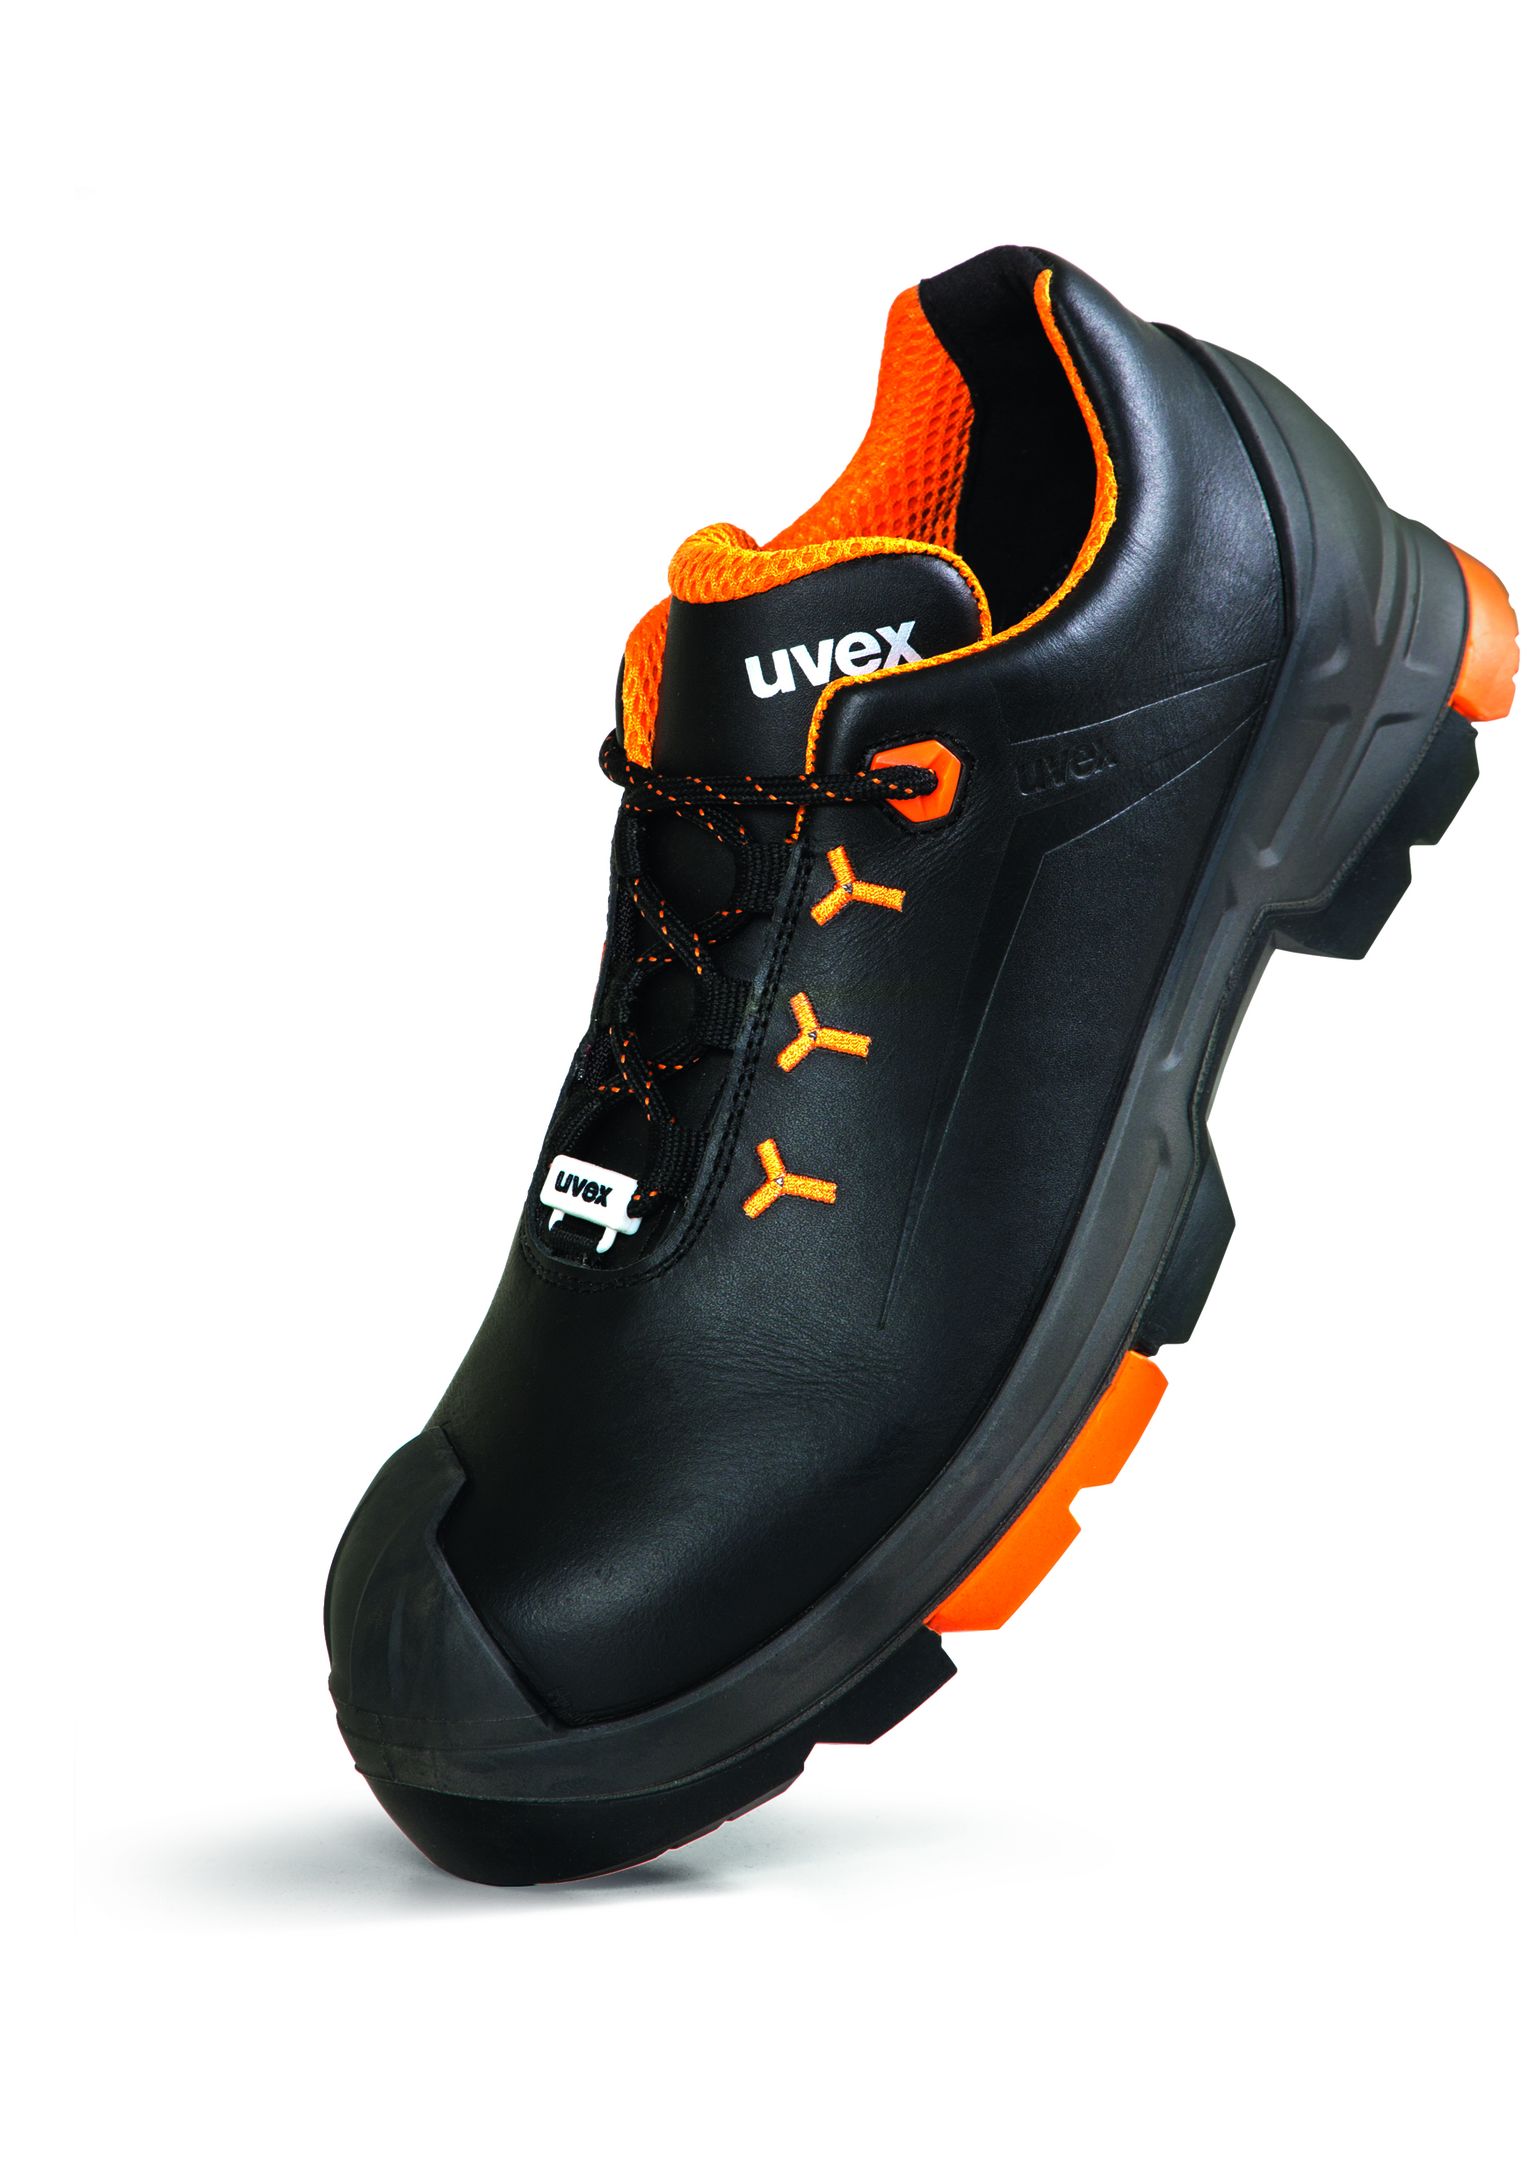 uvex safety footwear